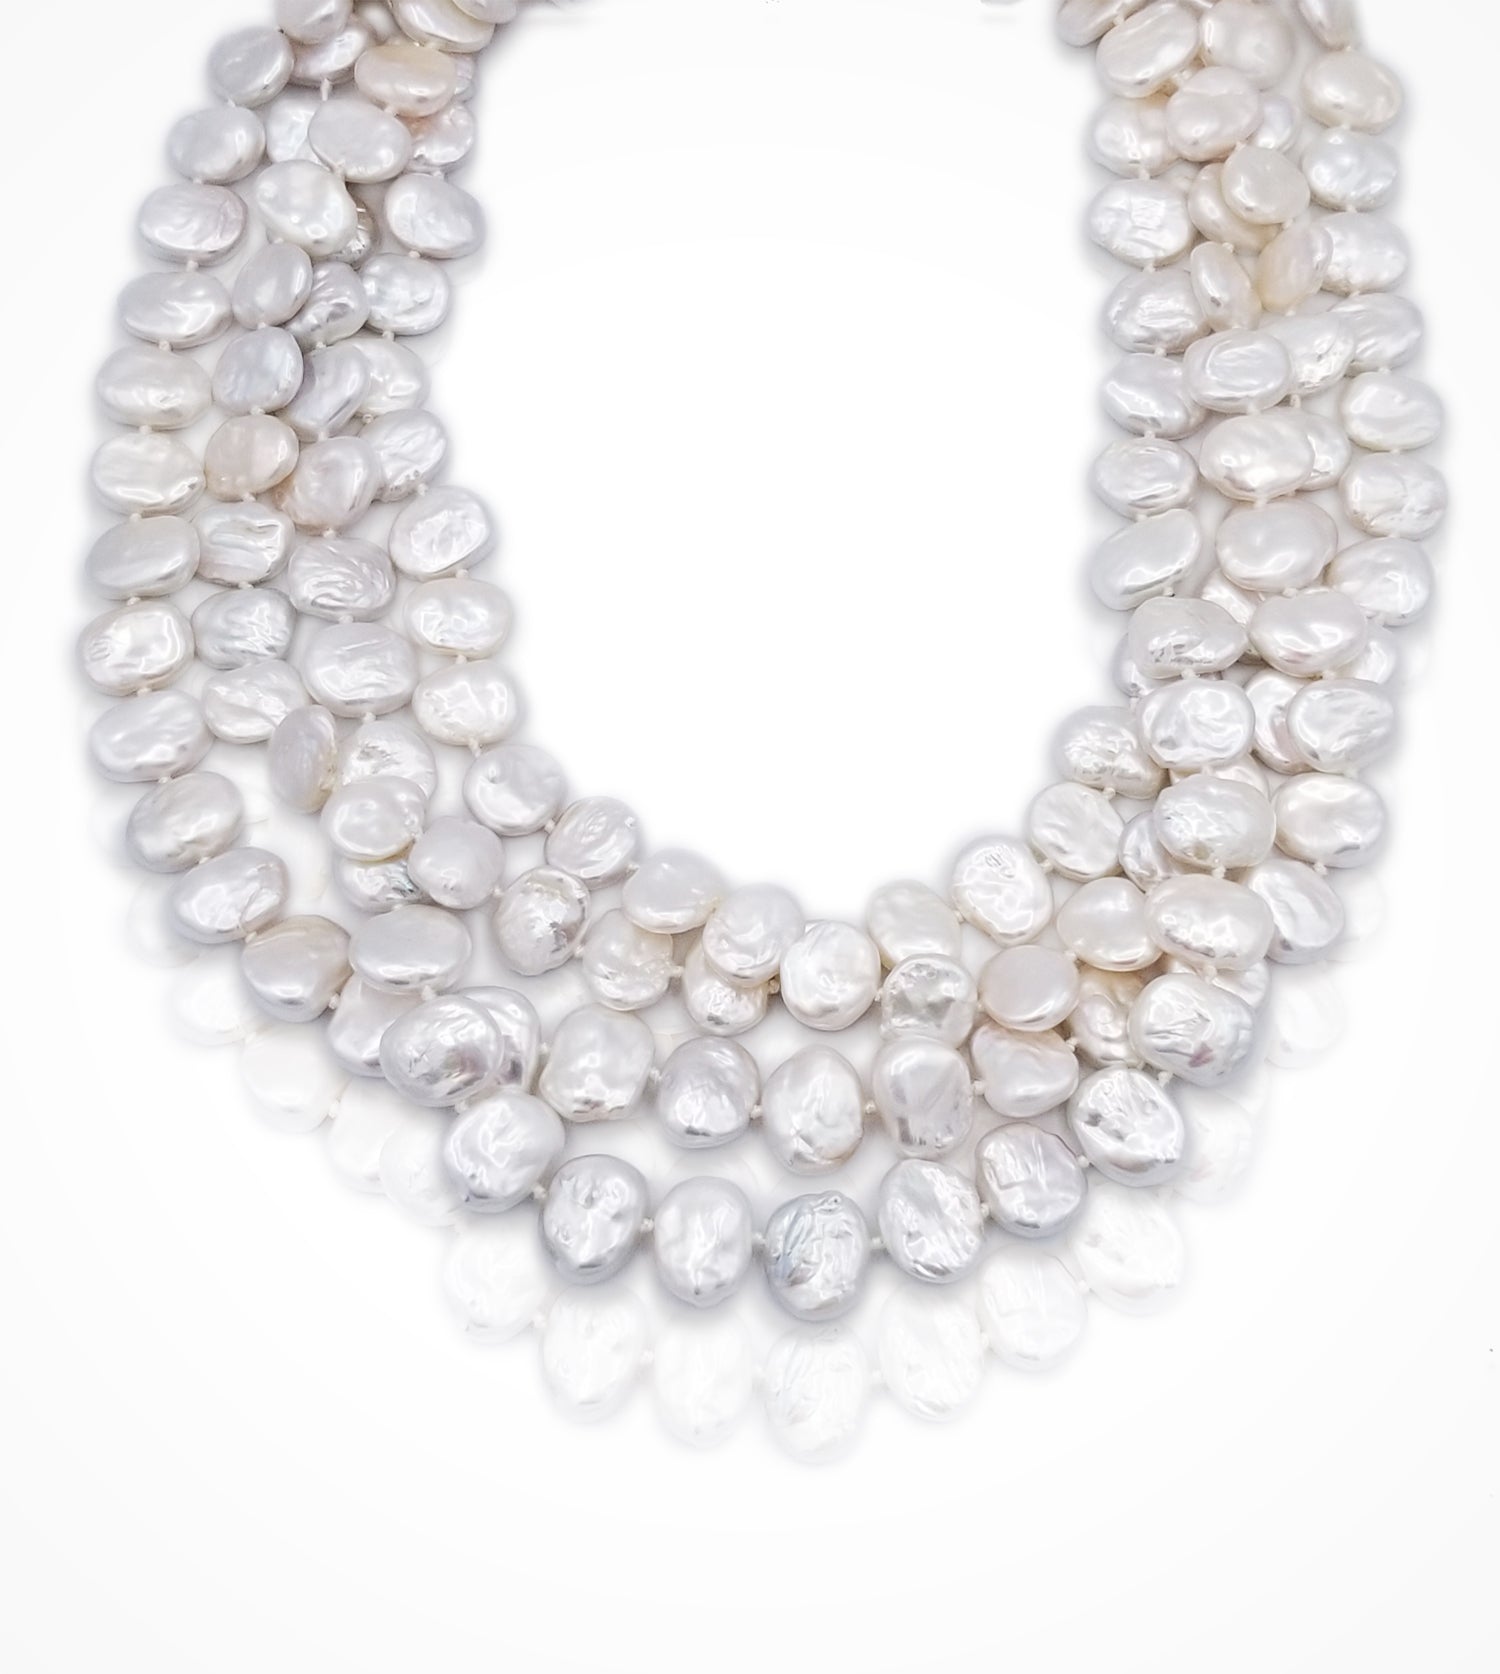 NE-006998 single long  strands of Japanese Biwa coin pearls, 34 inches long $975.00 each strand